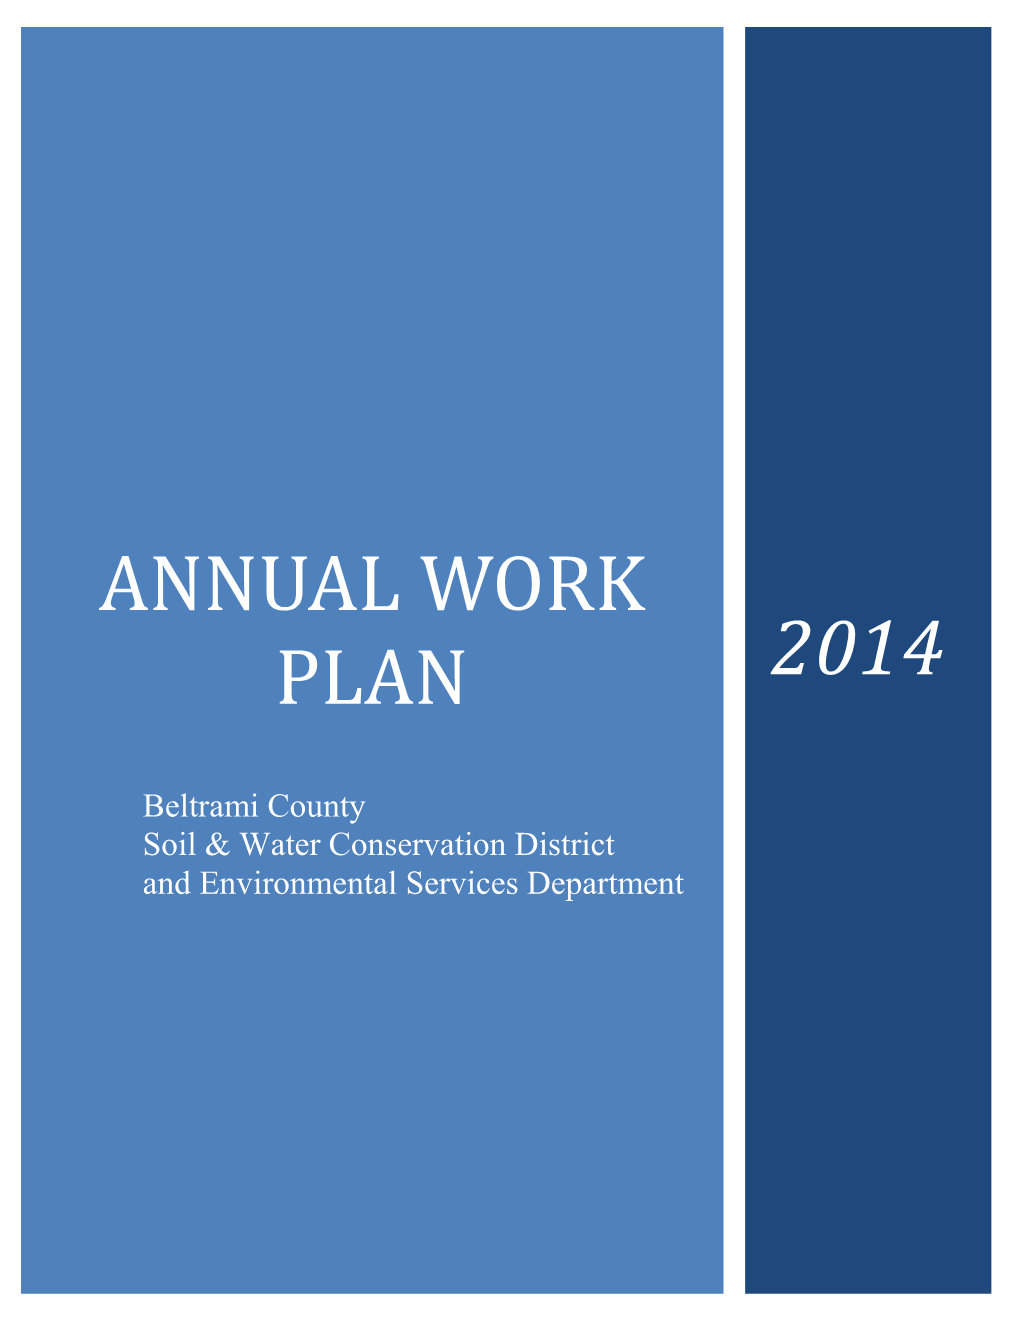 Annual Work Plan 2014